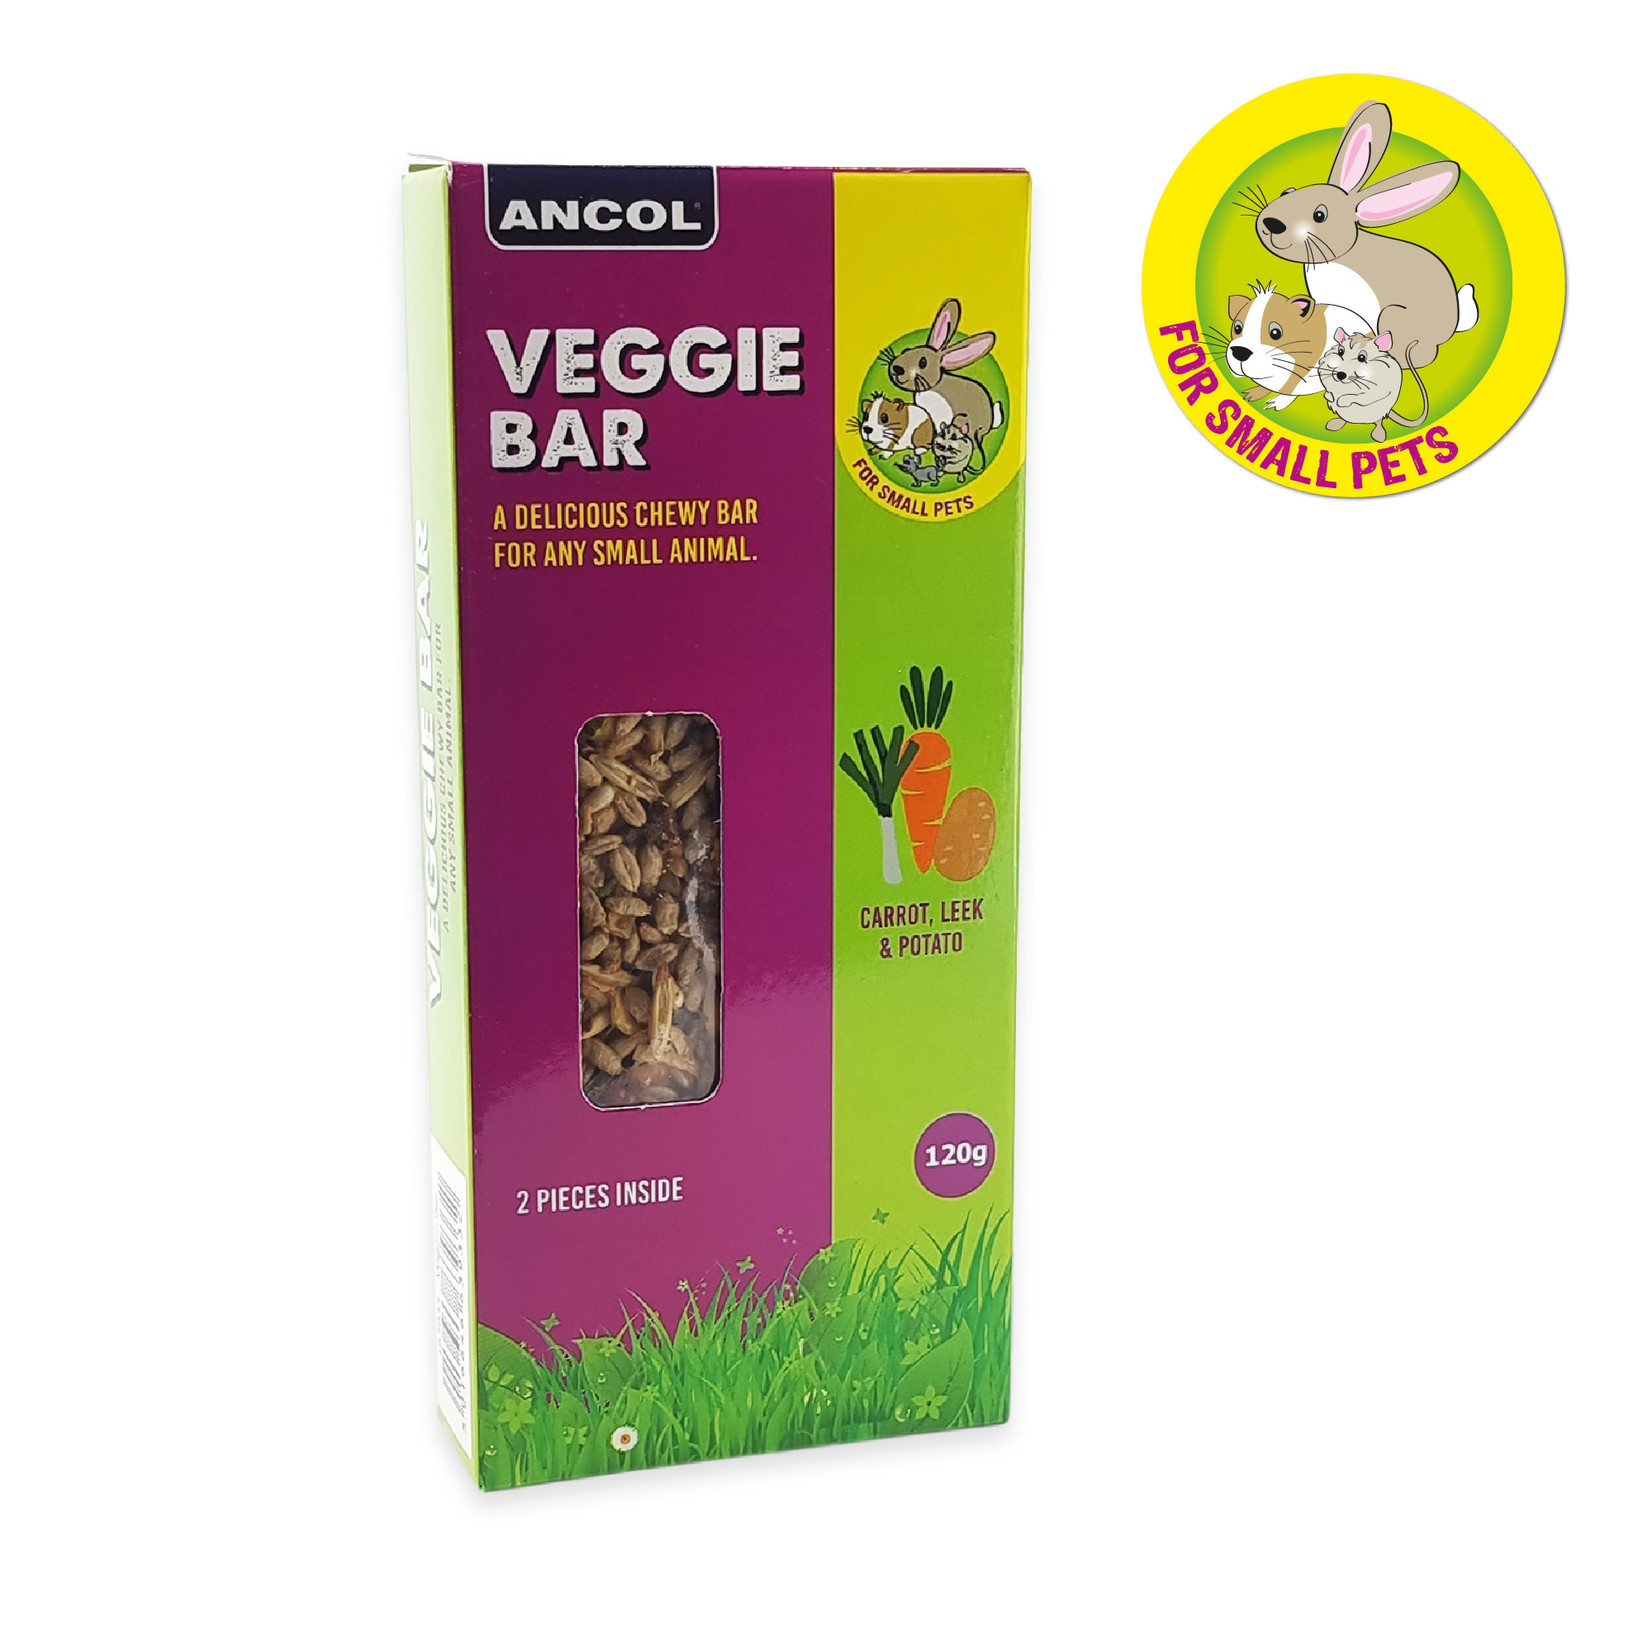 Ancol Veggie Bar Carrot, Leek & Potato Chewy Small Animal Treats, 120g